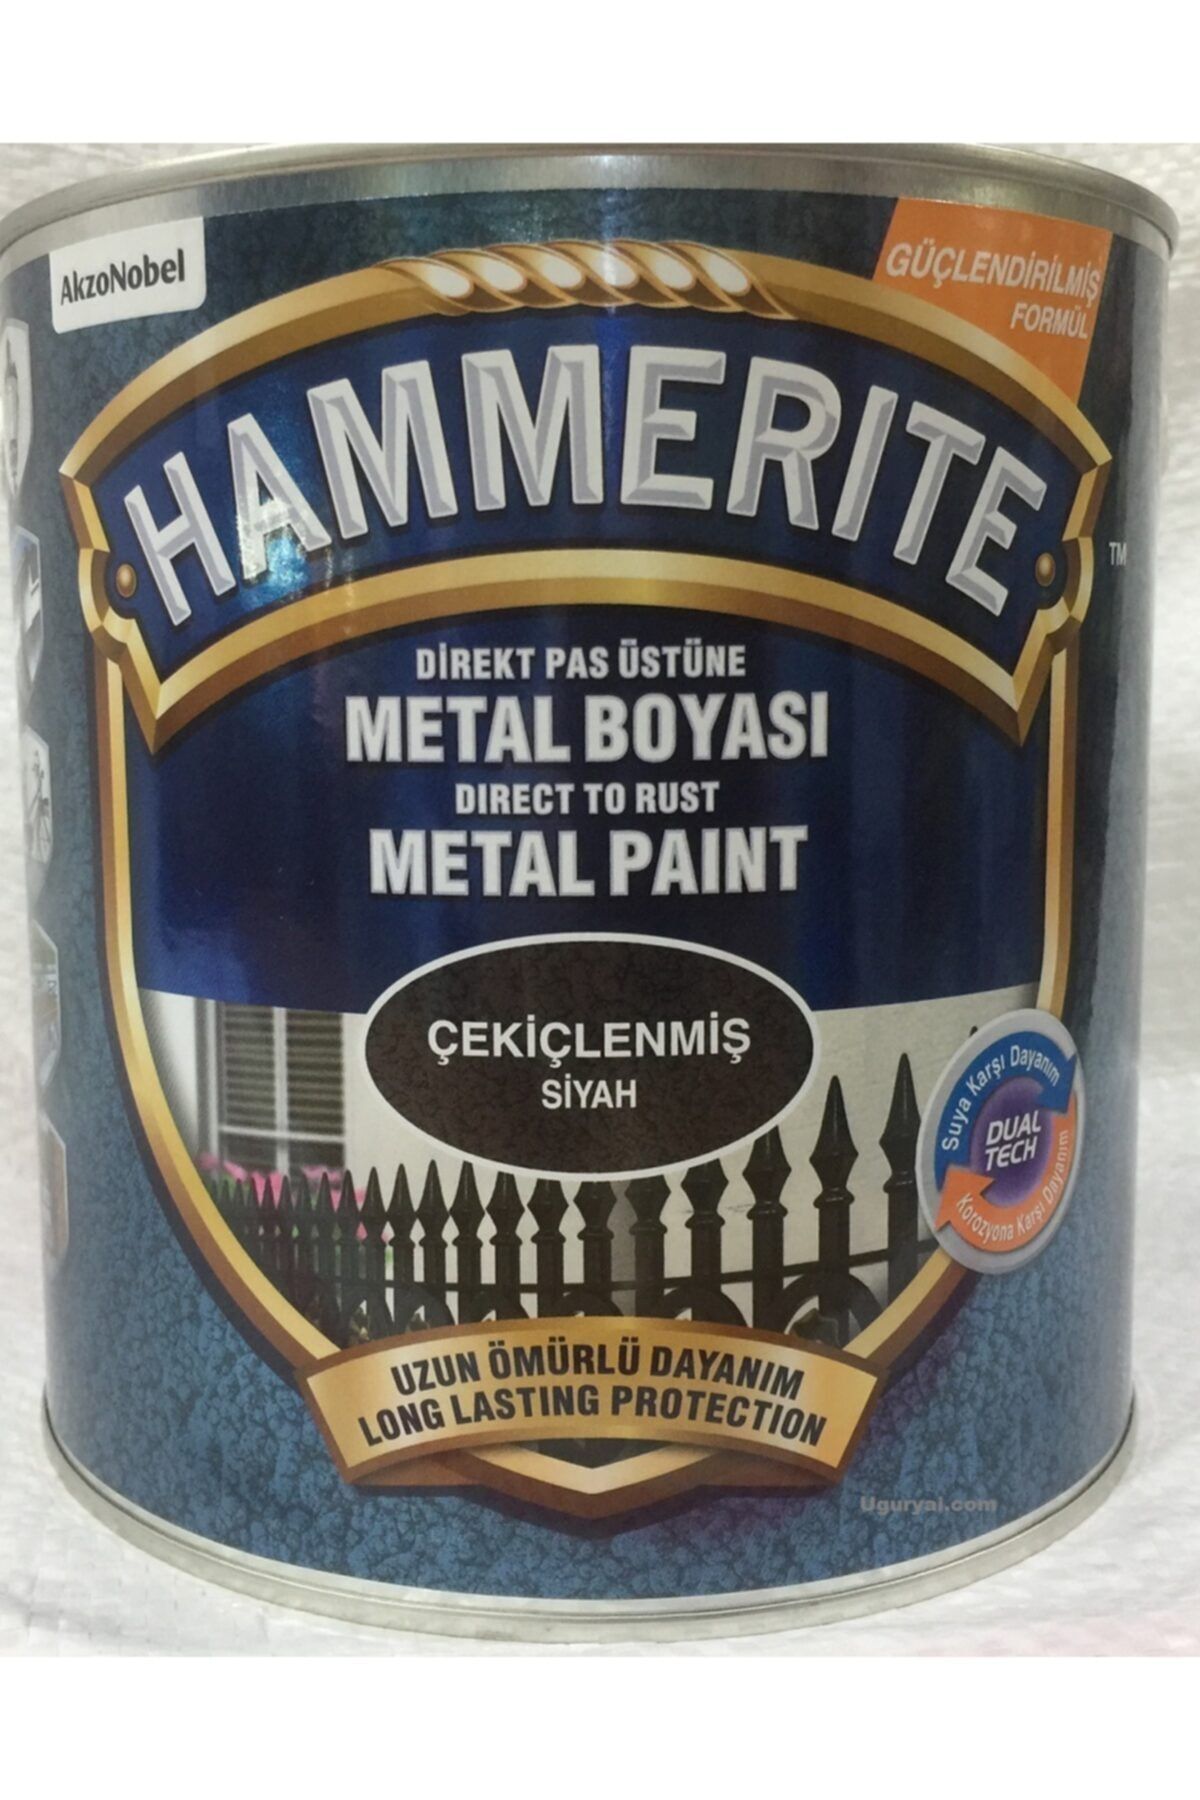 Hammerite on rust фото 95